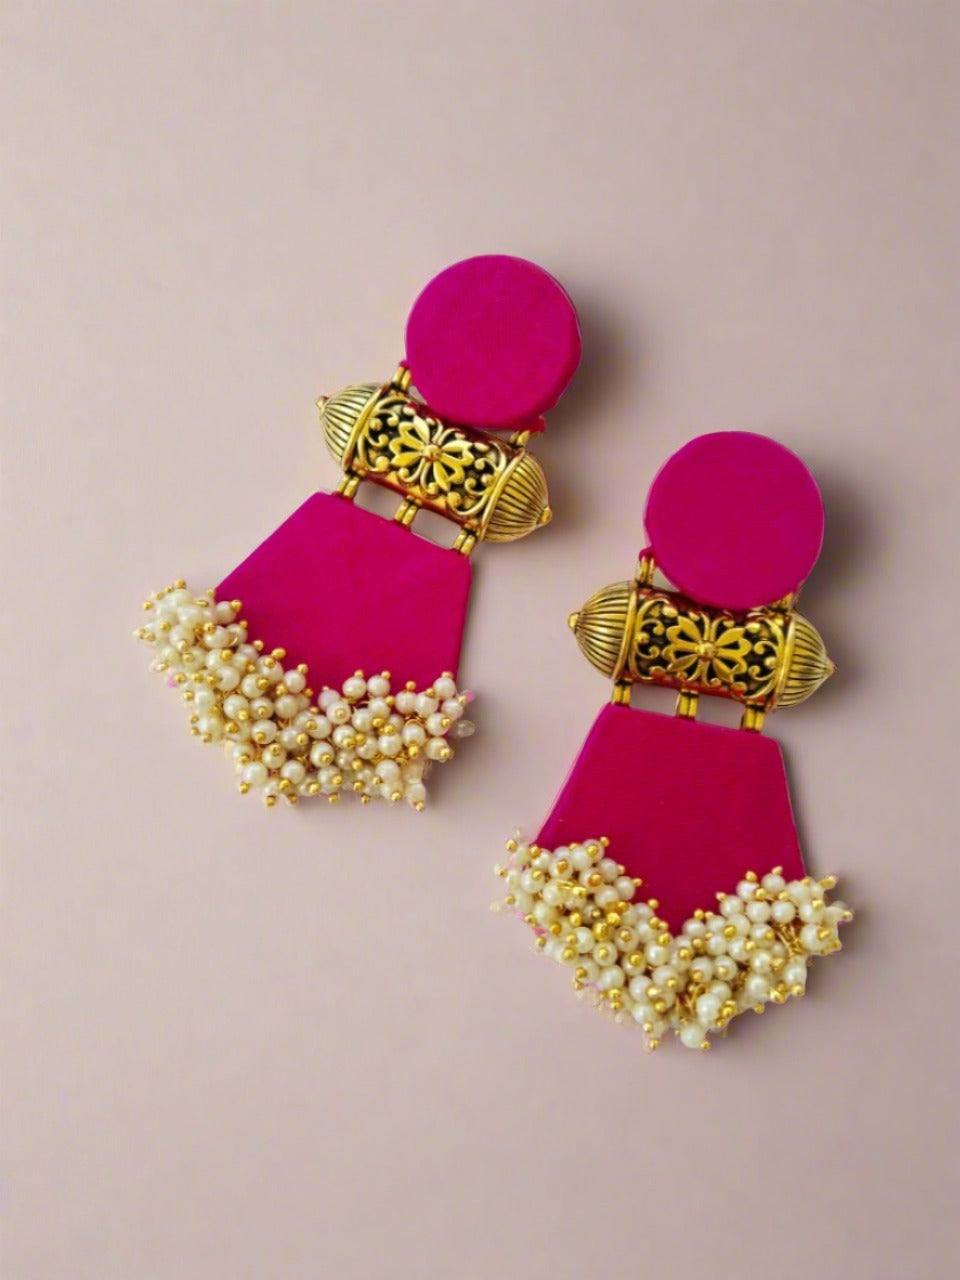 Pink earrings with golden tabiz, white beads on white backdrop